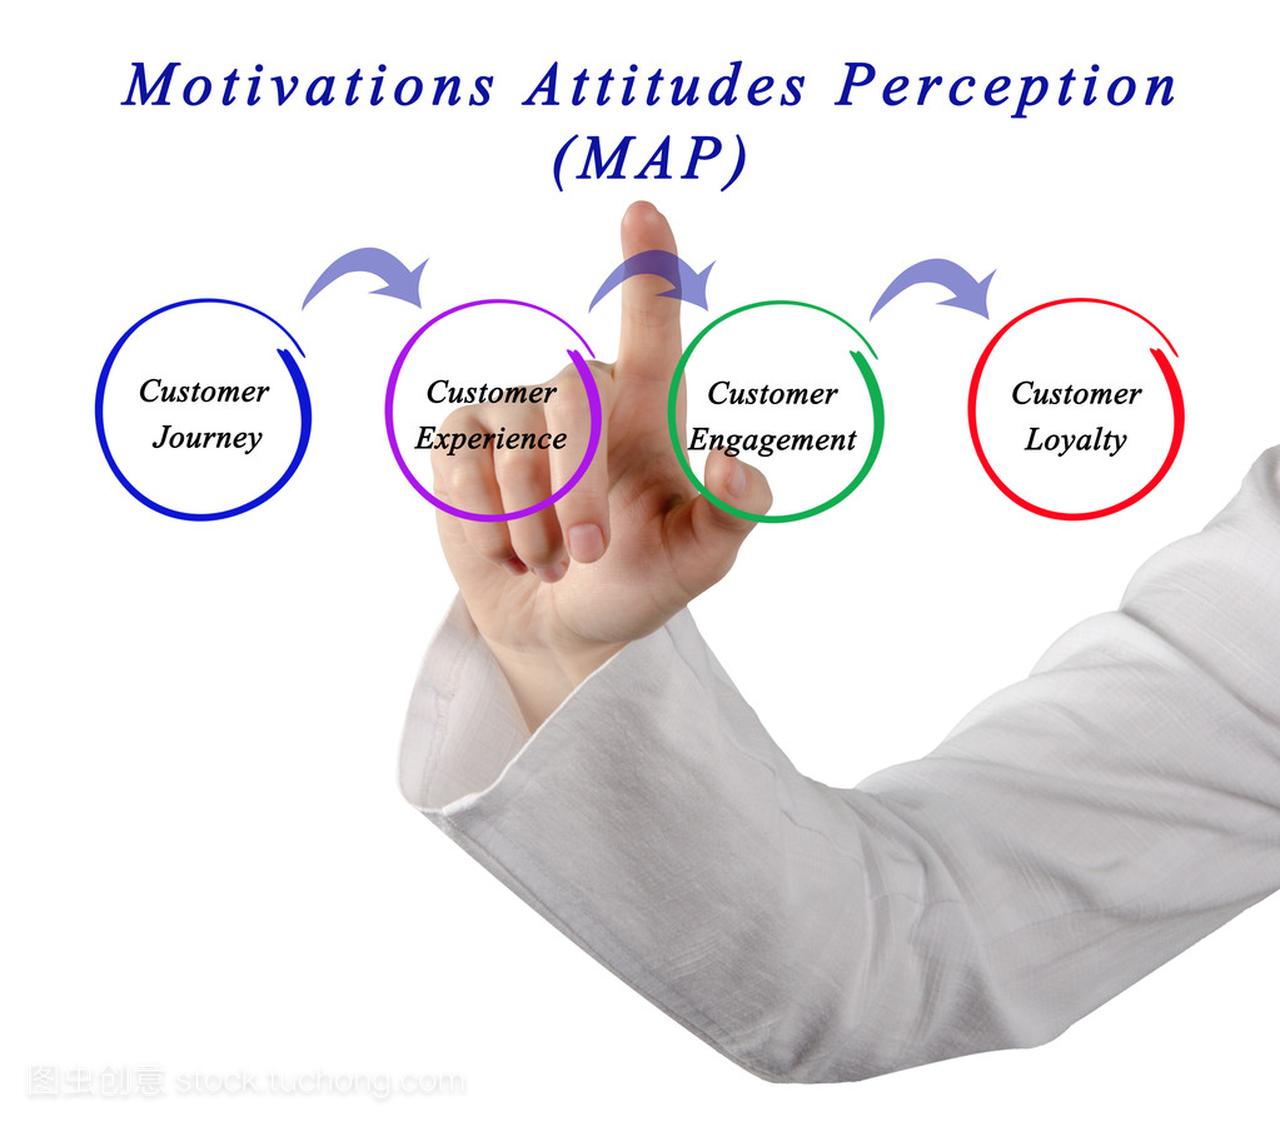 Motivations Attitudes Perception (MAP)